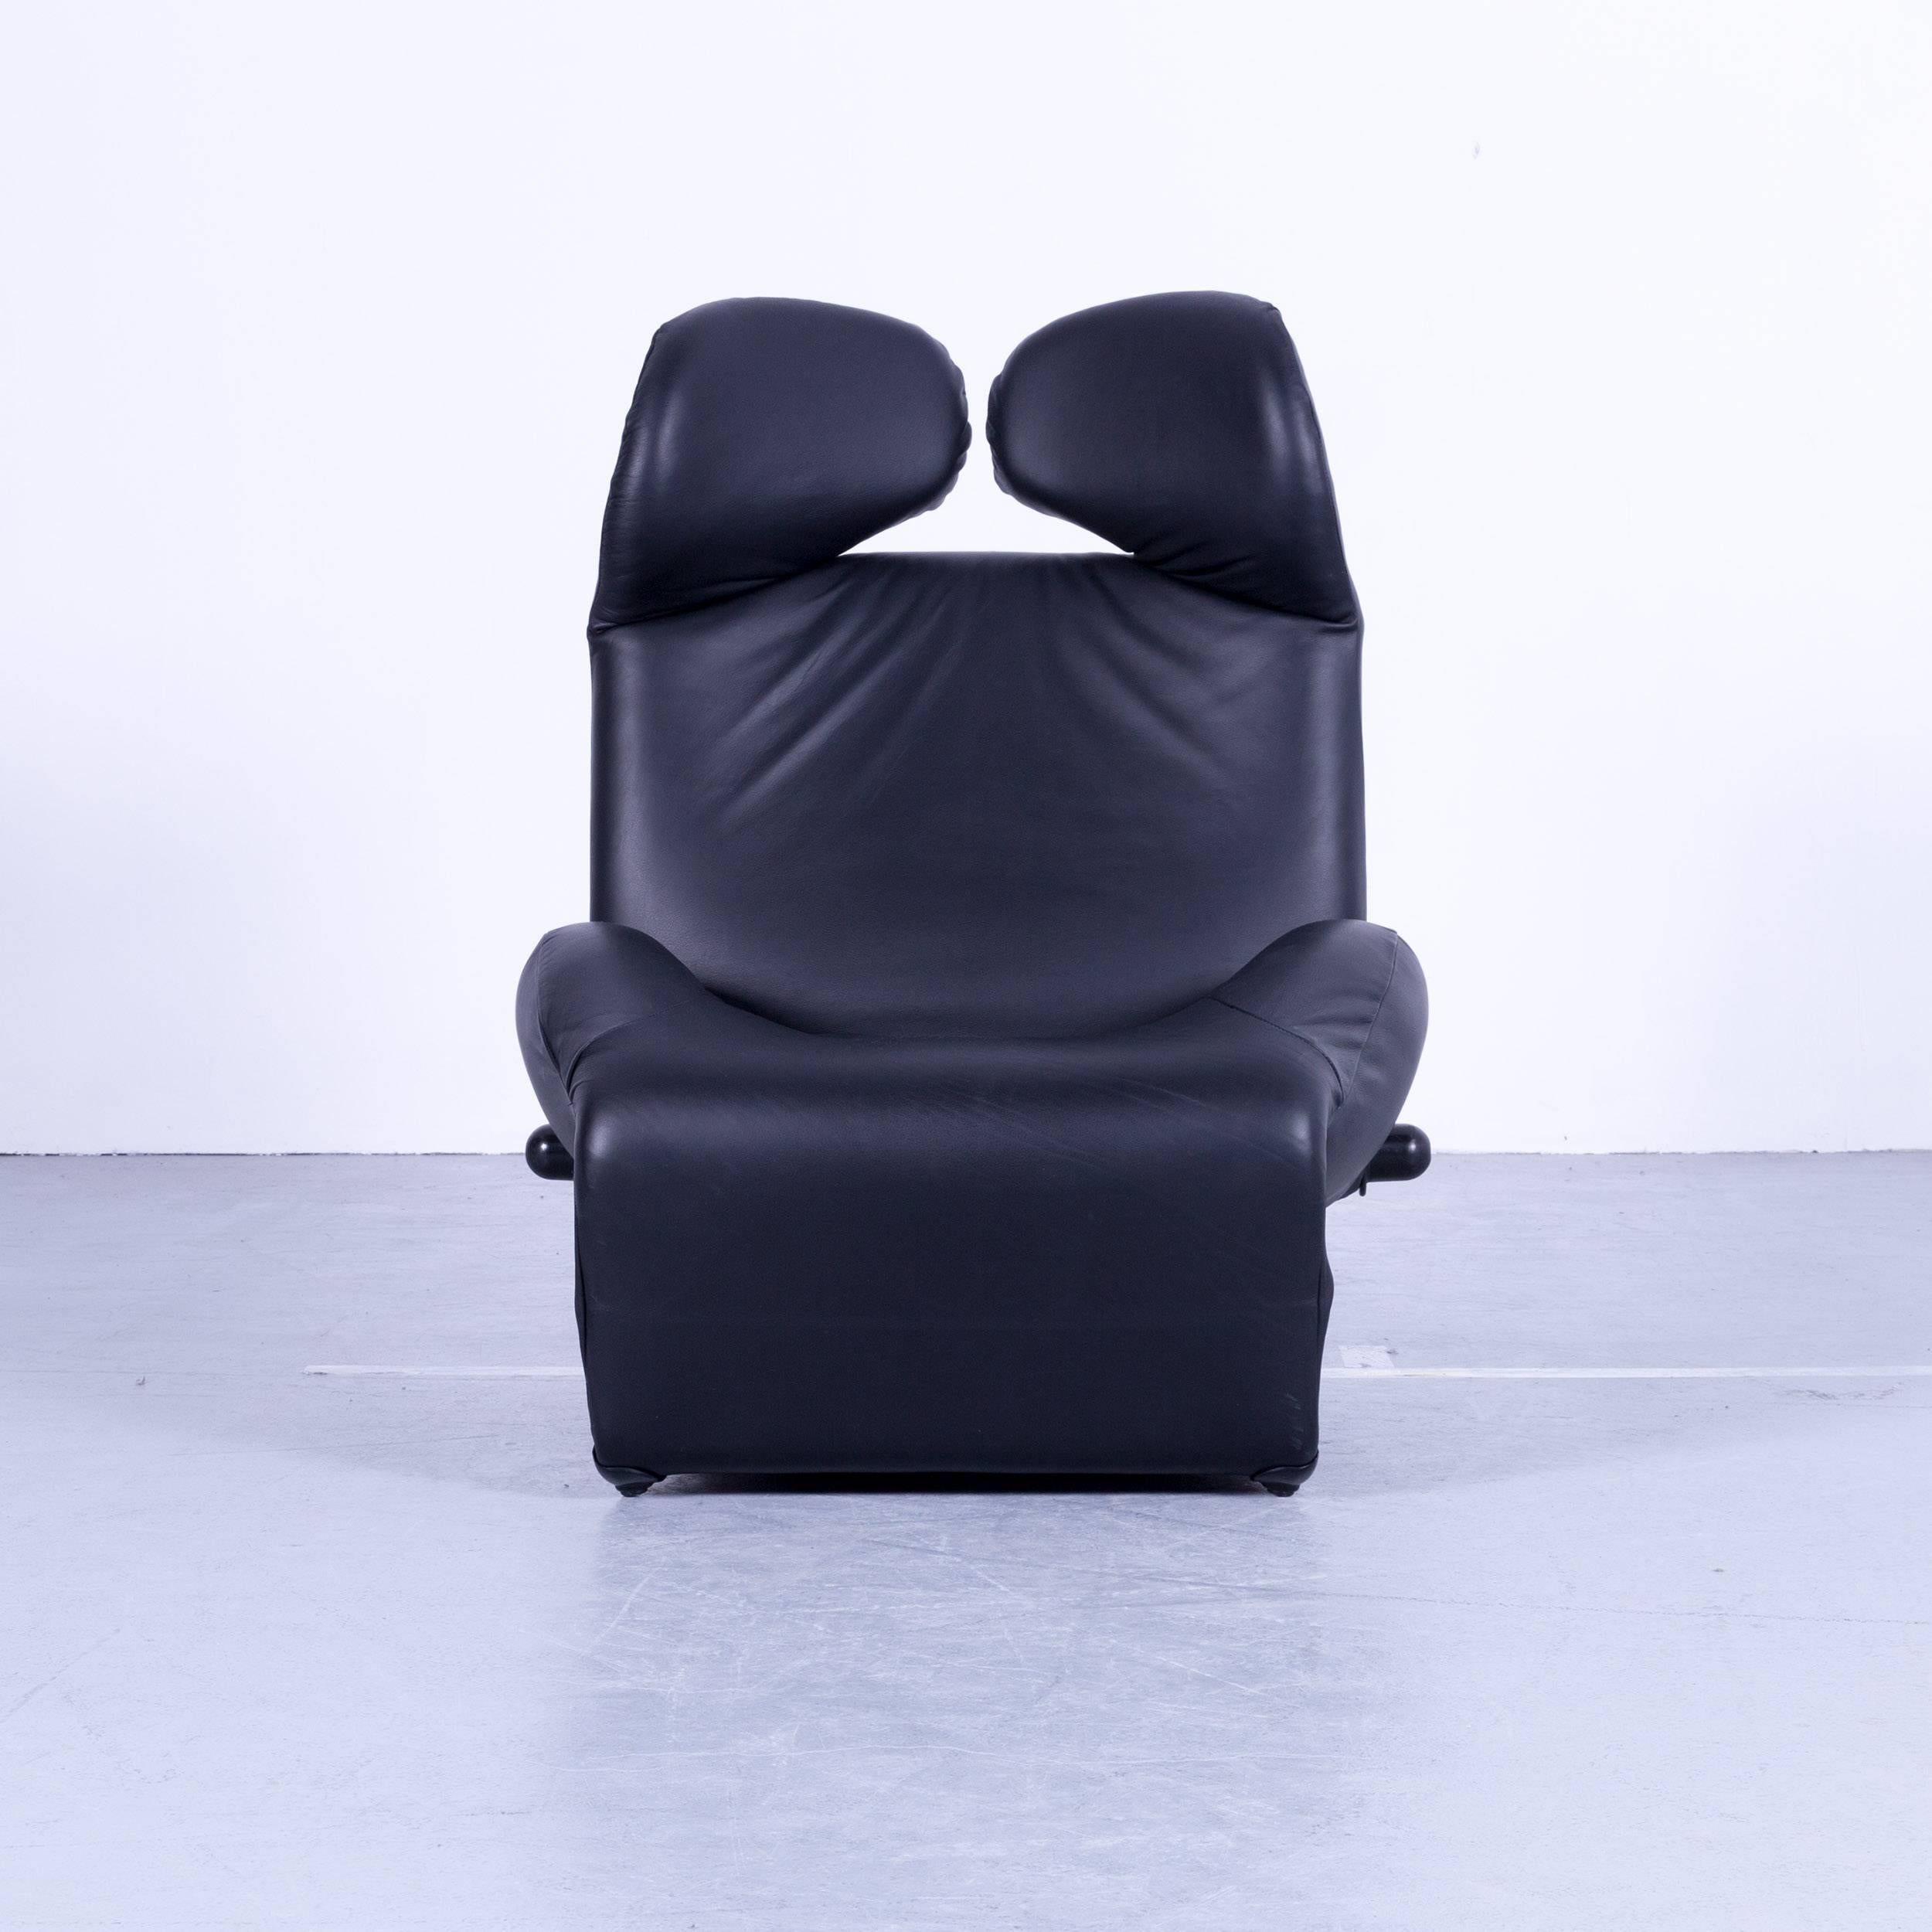 Italian Cassina Wink Designer Chair Black Leather Function Recliner by Toshiyuki Kita